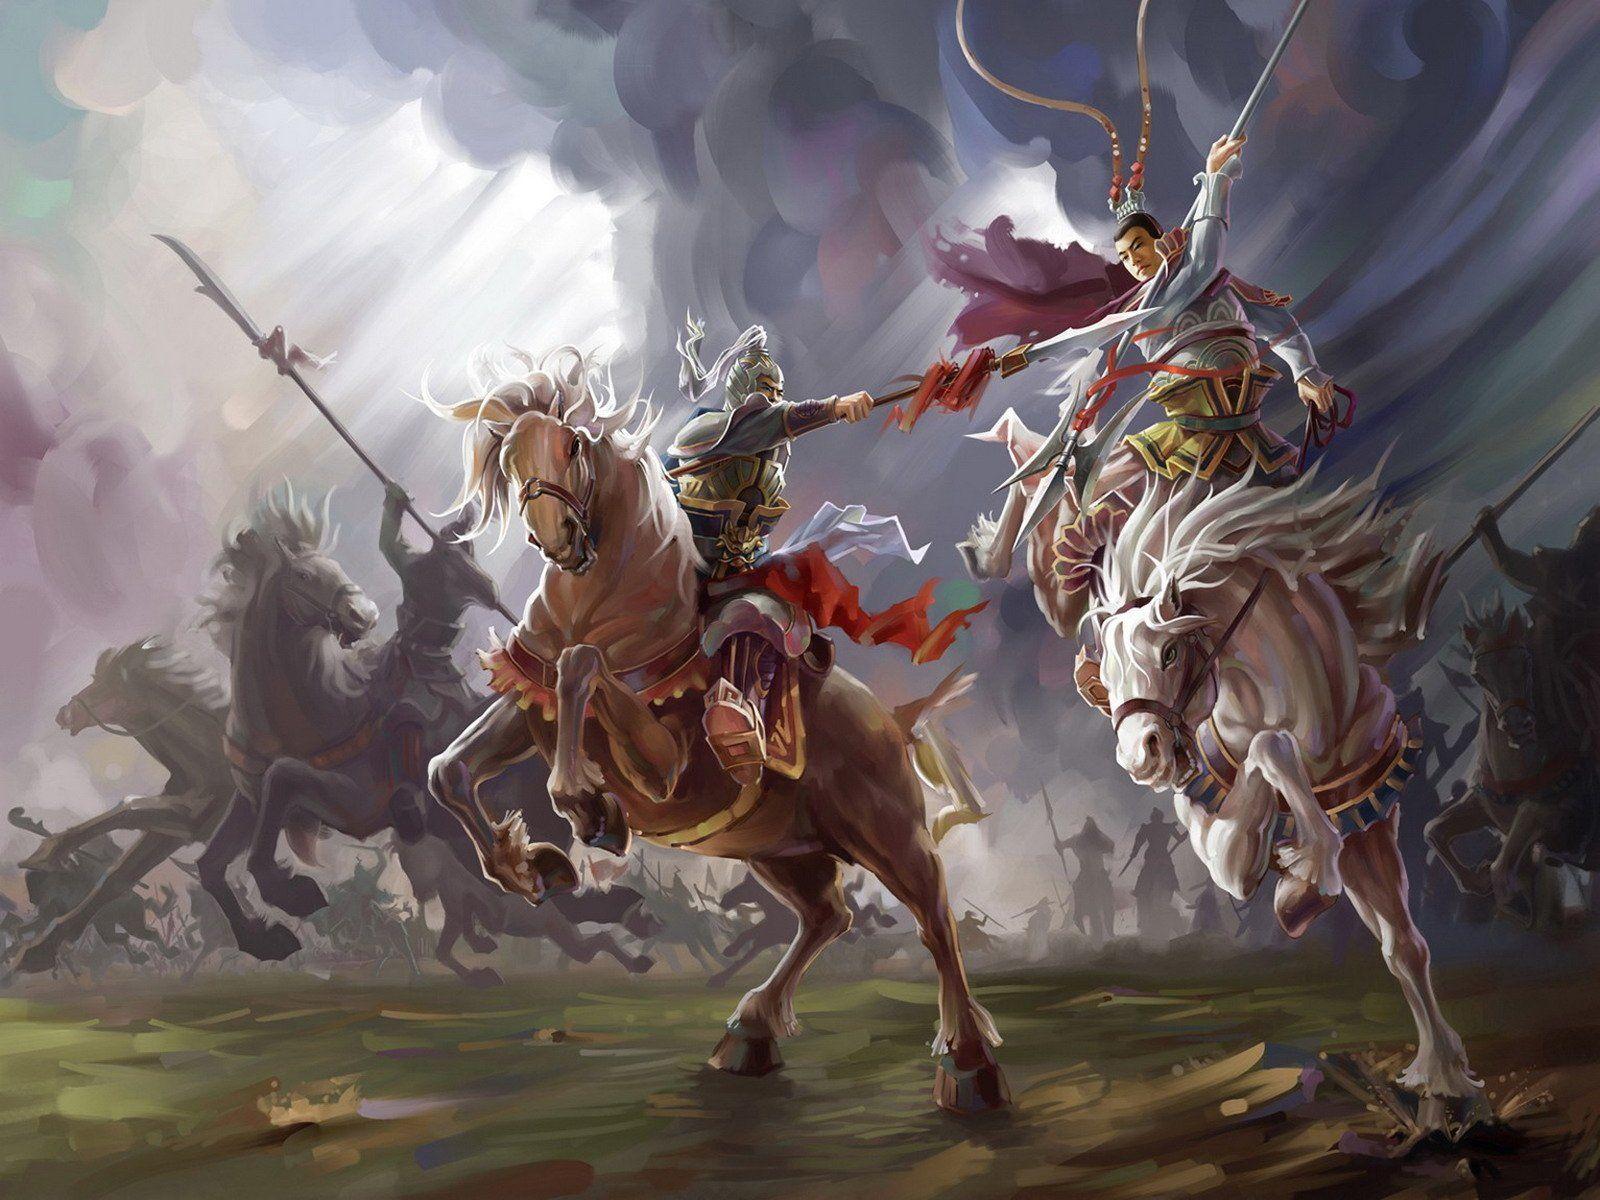 Video Game Heroes Of Three Kingdoms Wallpaper in 2019